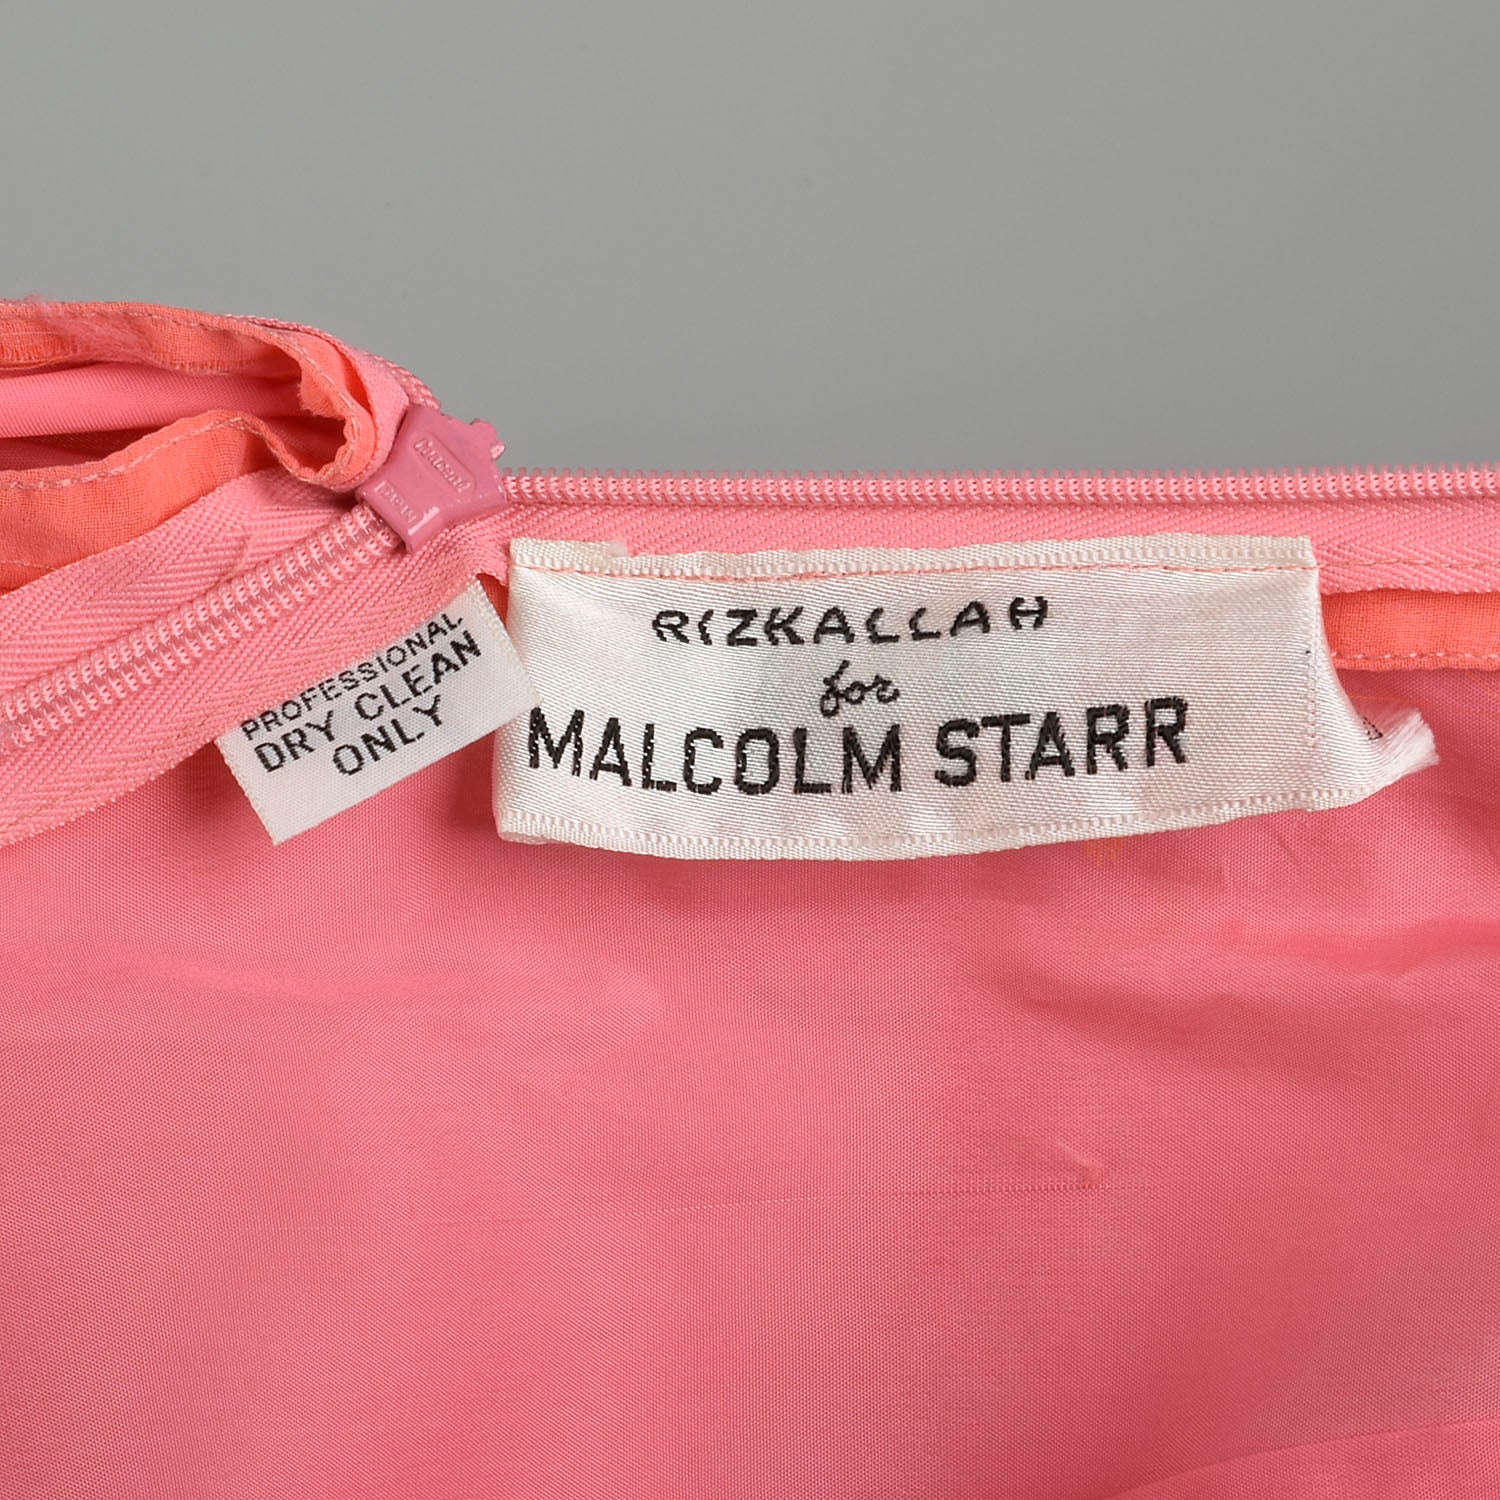 Medium 1970s Malcolm Starr Evening Gown Bohemian Formal Hollywood Glamorous Flowy Elegant Cape